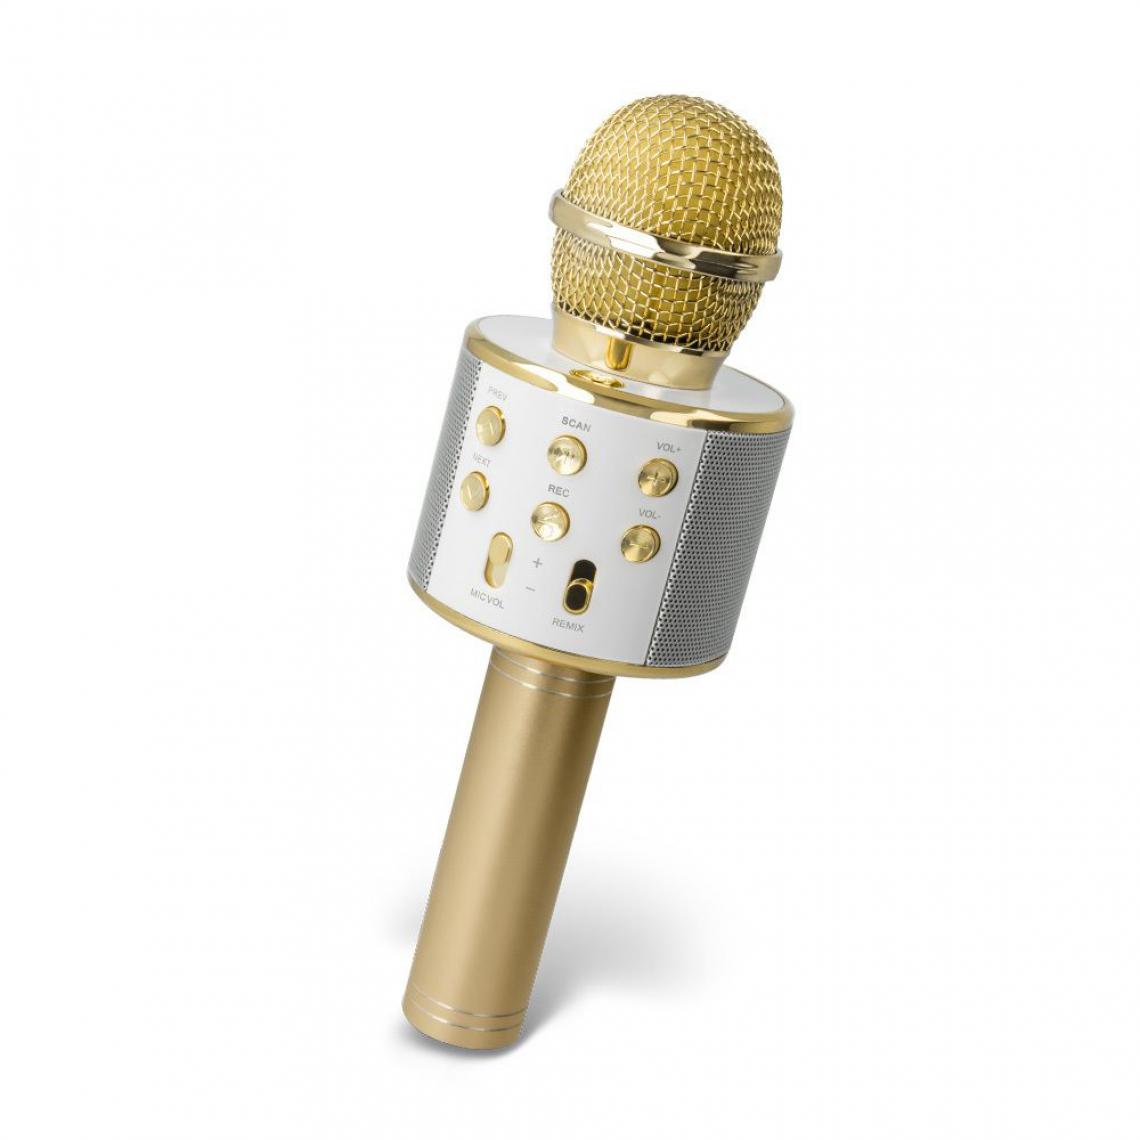 Ozzzo - Microphone Karaoke bluetooth haut parleur ozzzo Gold Or pour ZTE Blade A7s 2020 - Autres accessoires smartphone